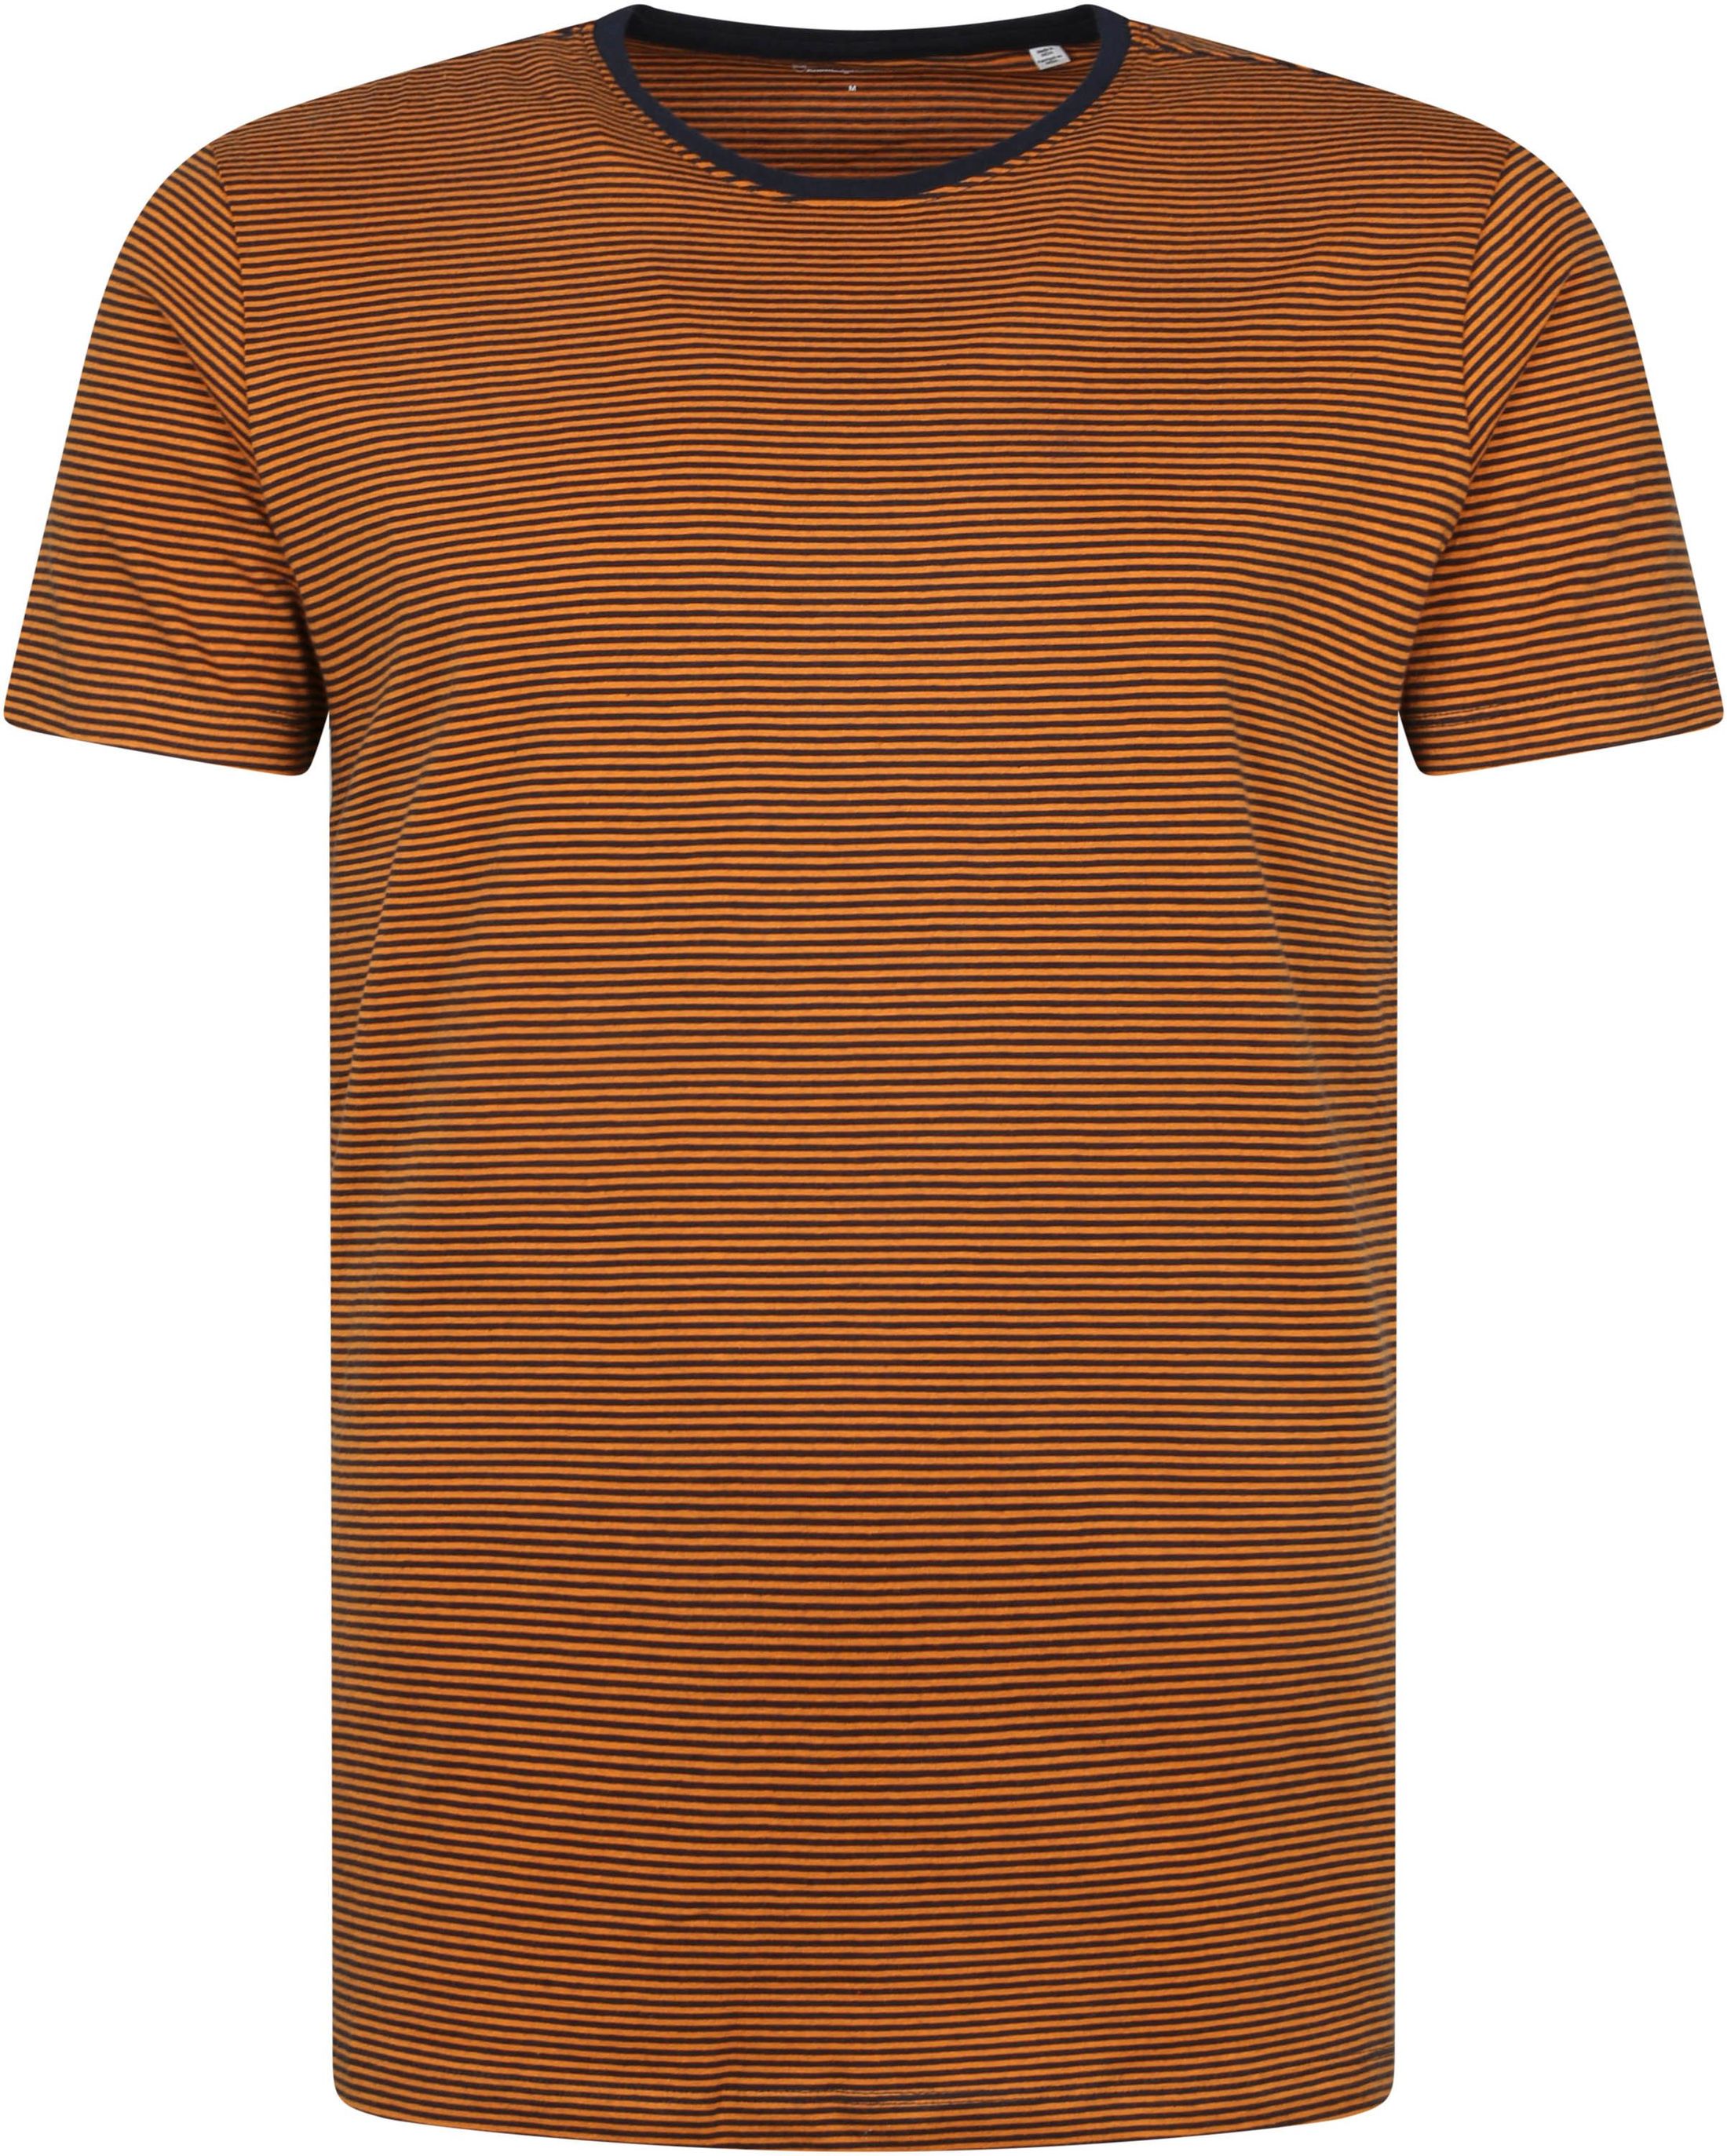 KnowledgeCotton Apparel T-shirt Desert Sun Stripe Brown size L